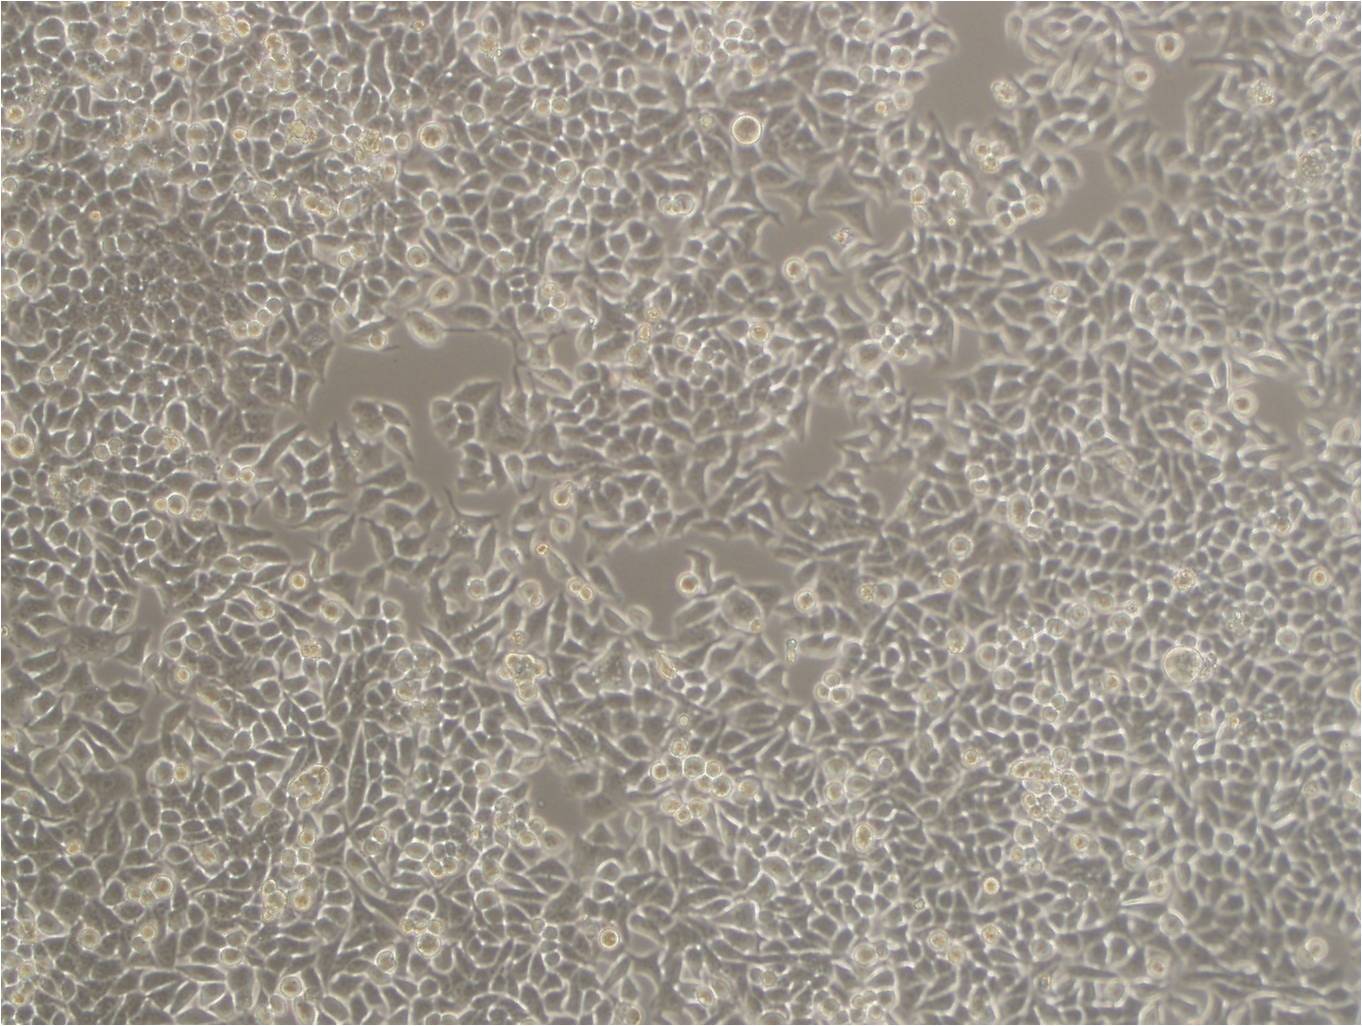 M2-10B4 cell line小鼠骨髓纤维原细胞系,M2-10B4 cell line